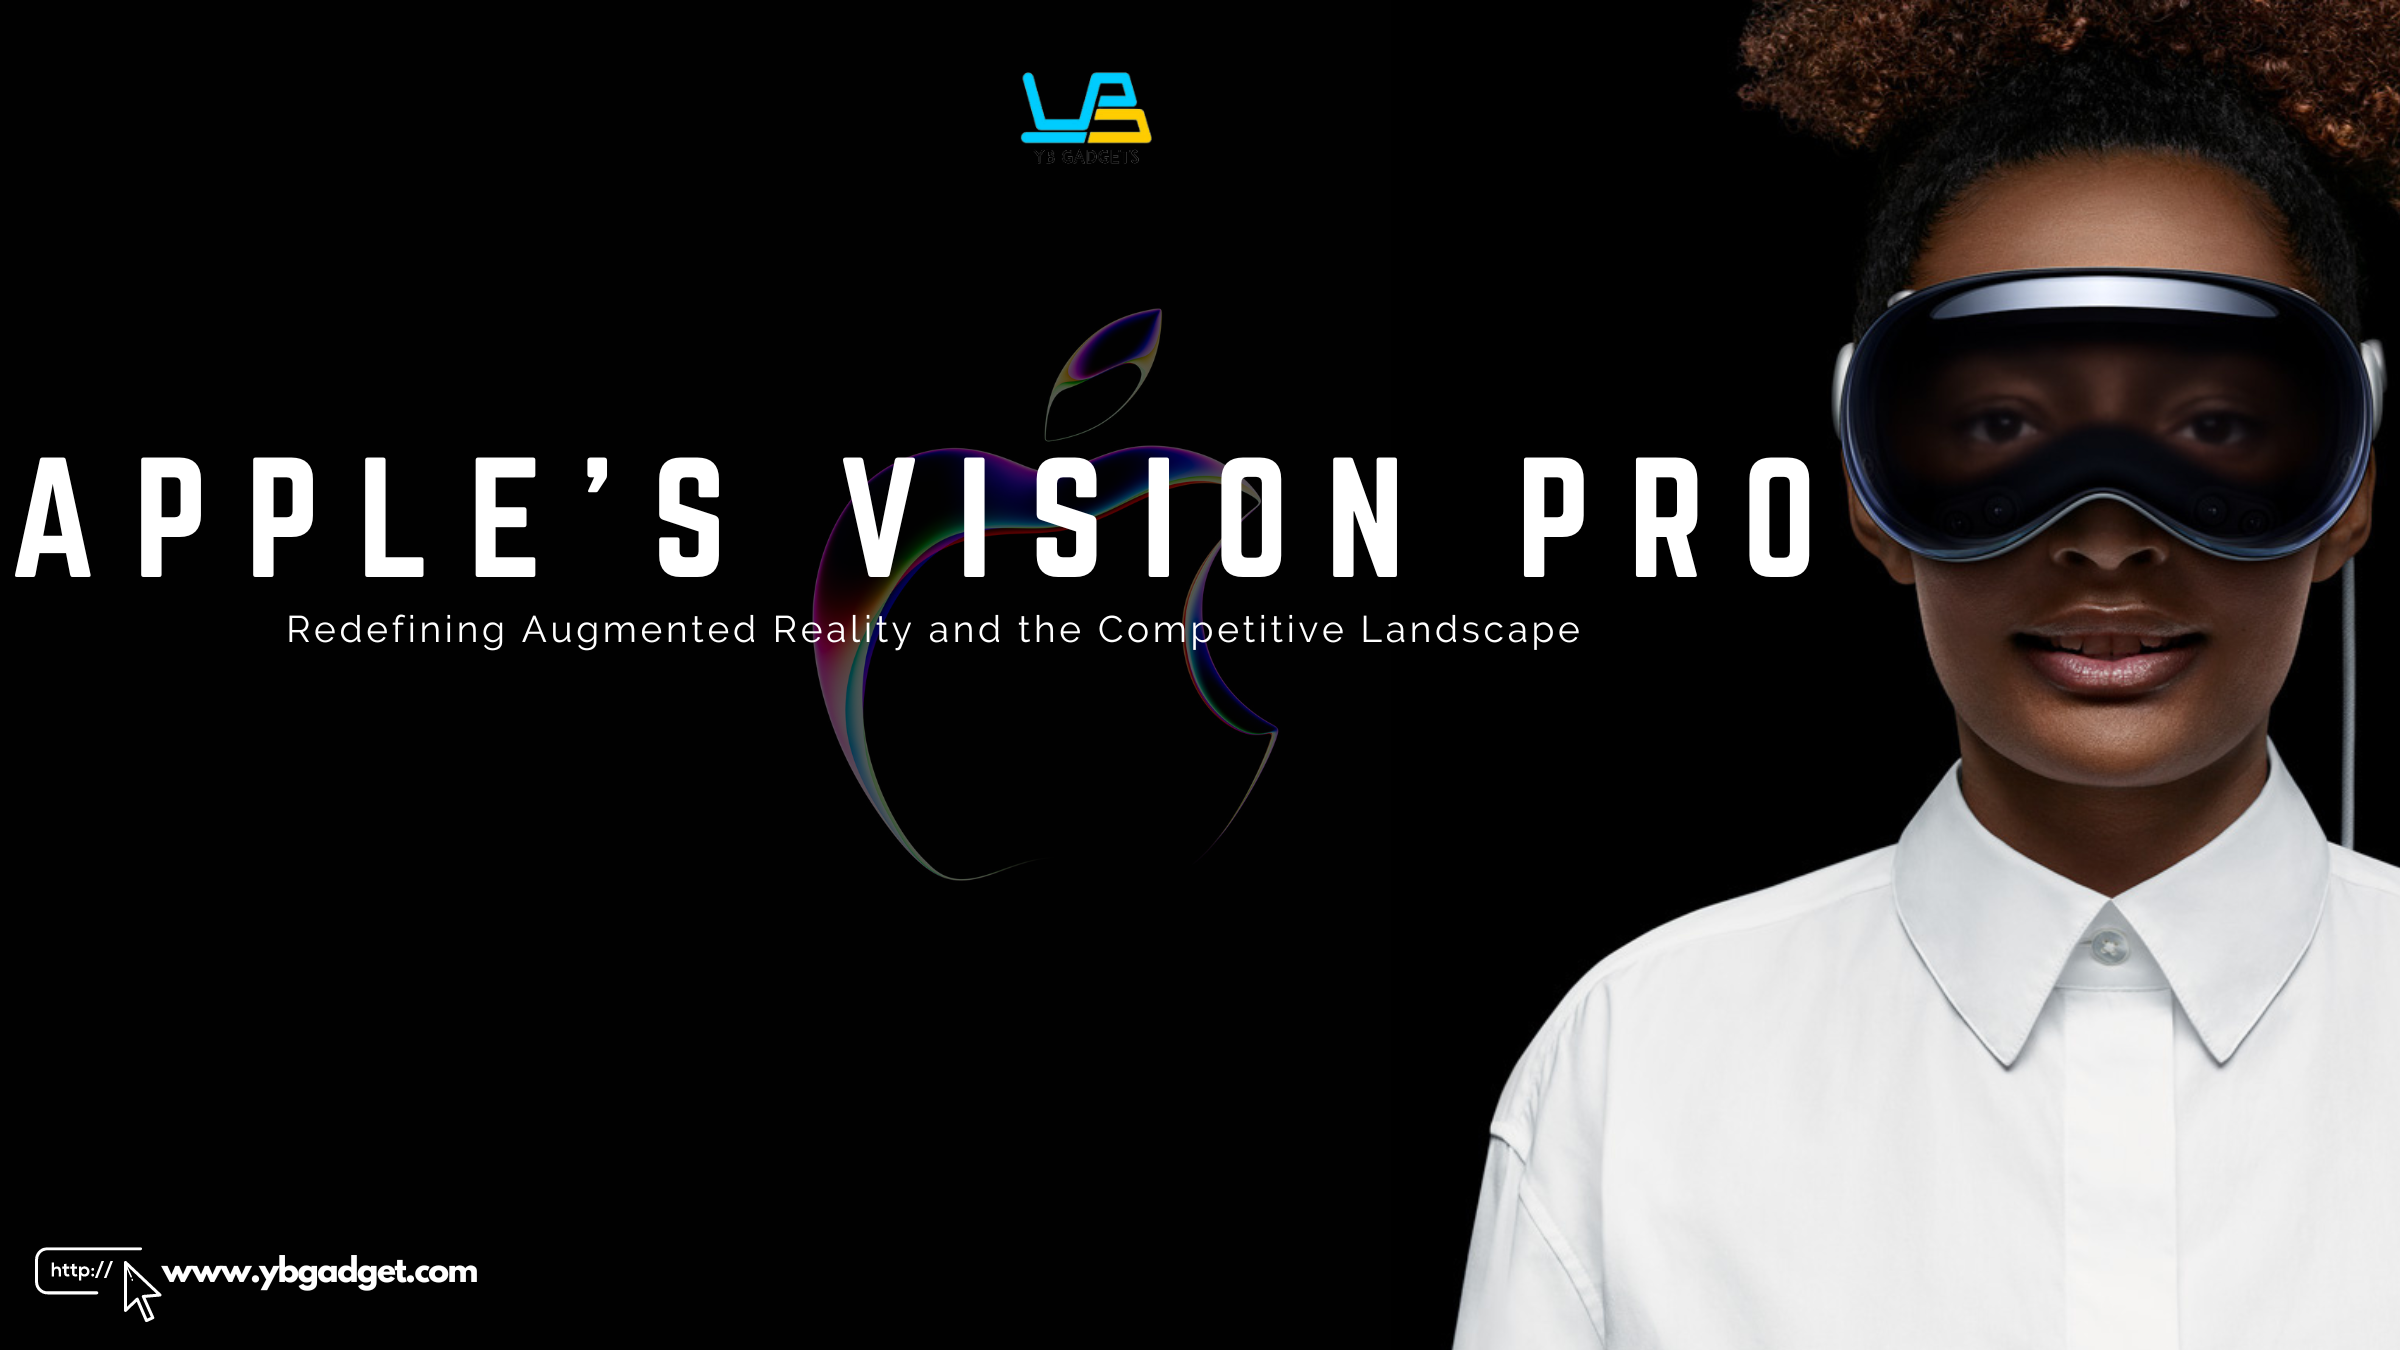 Apple’s Vision Pro